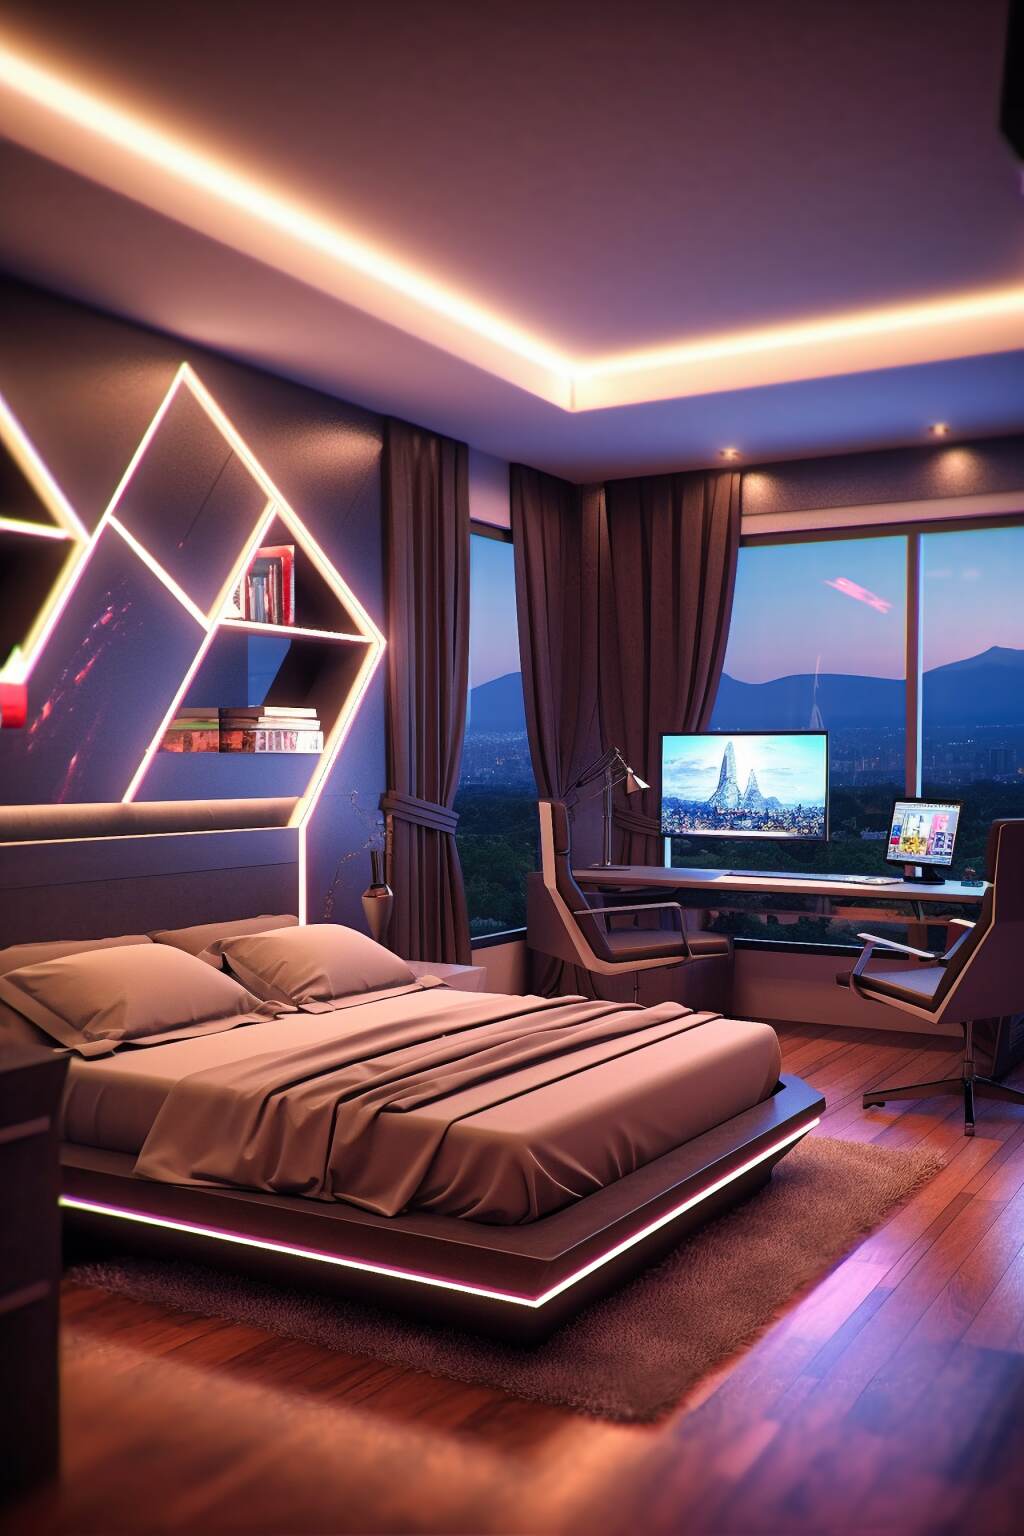 Geometric Haven Gaming Bedroom